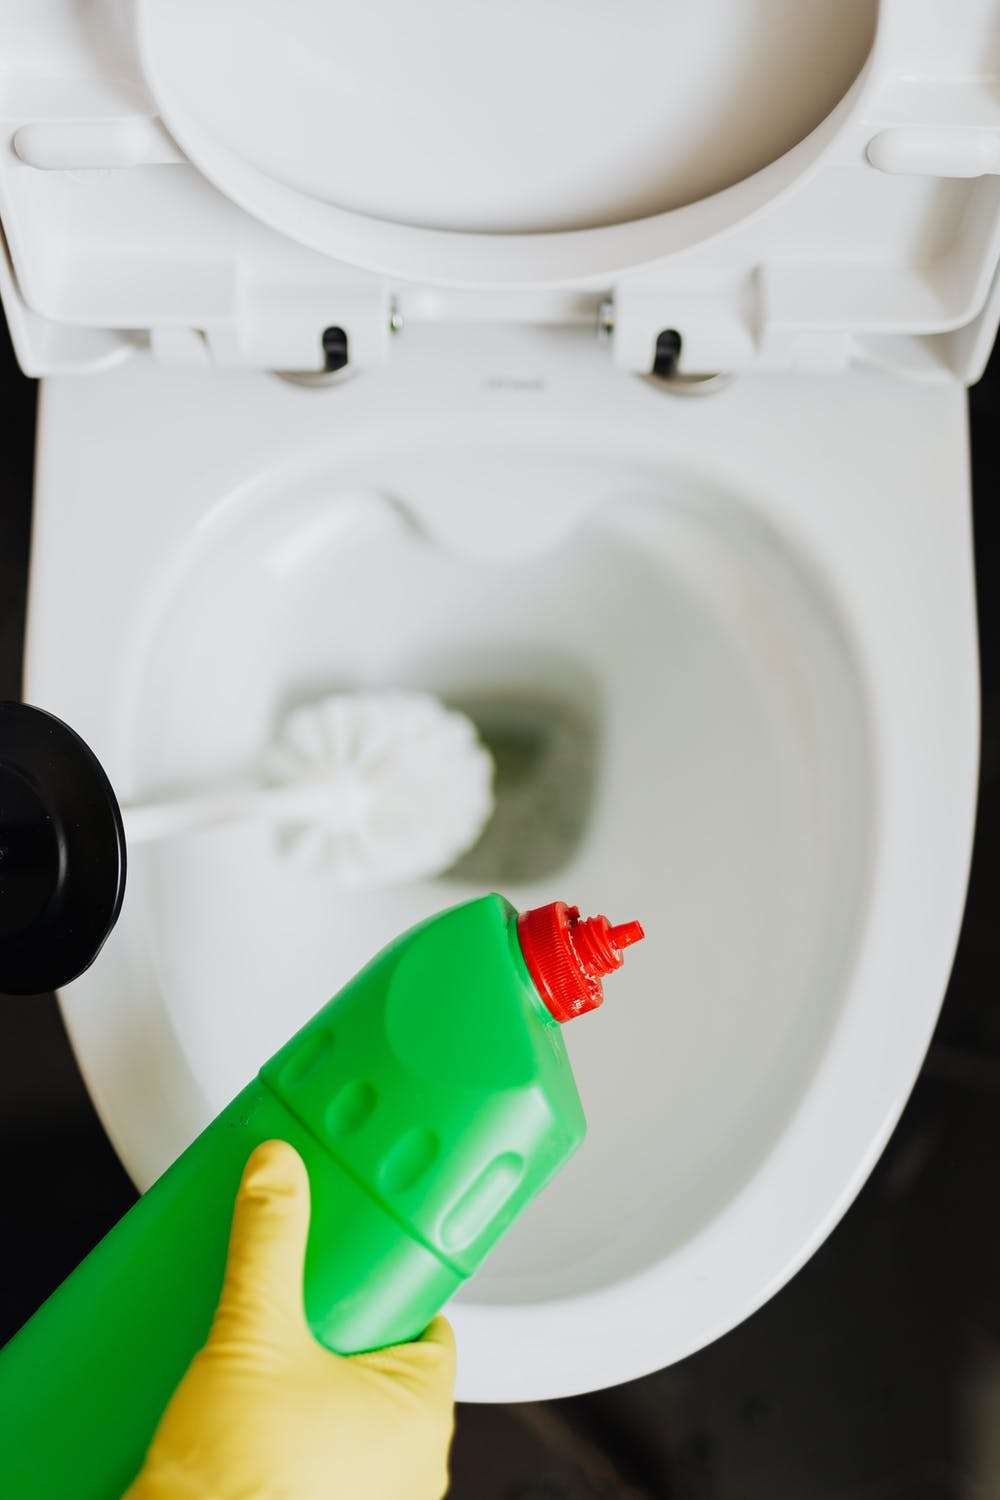 Do Not Flush Cat Poop Down Your Toilet